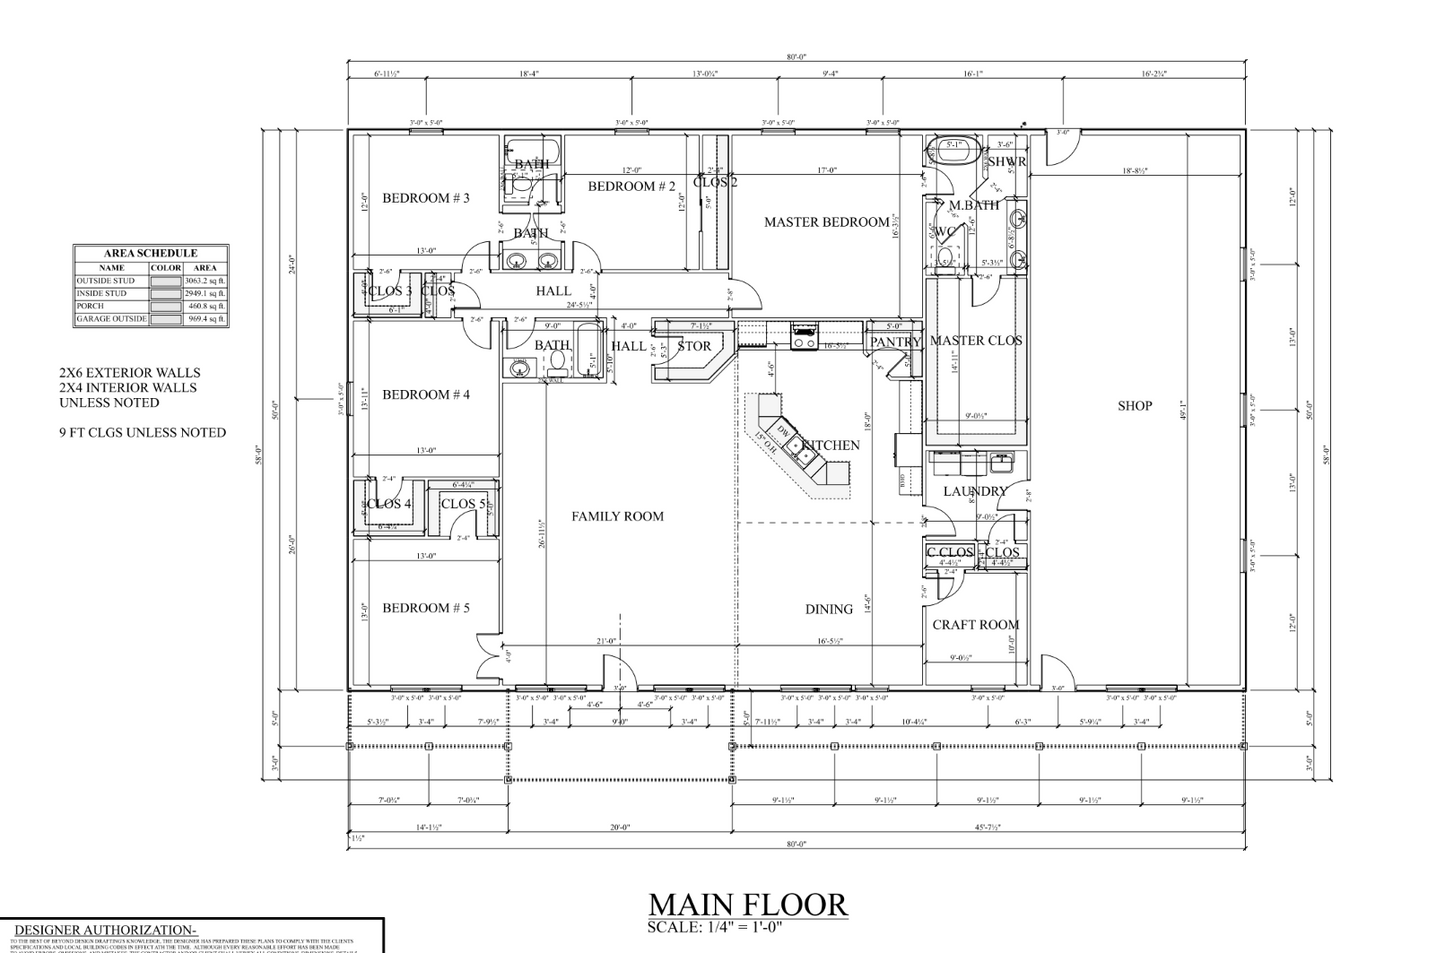 PL-62307 Sunnyside Barndominium House Plans